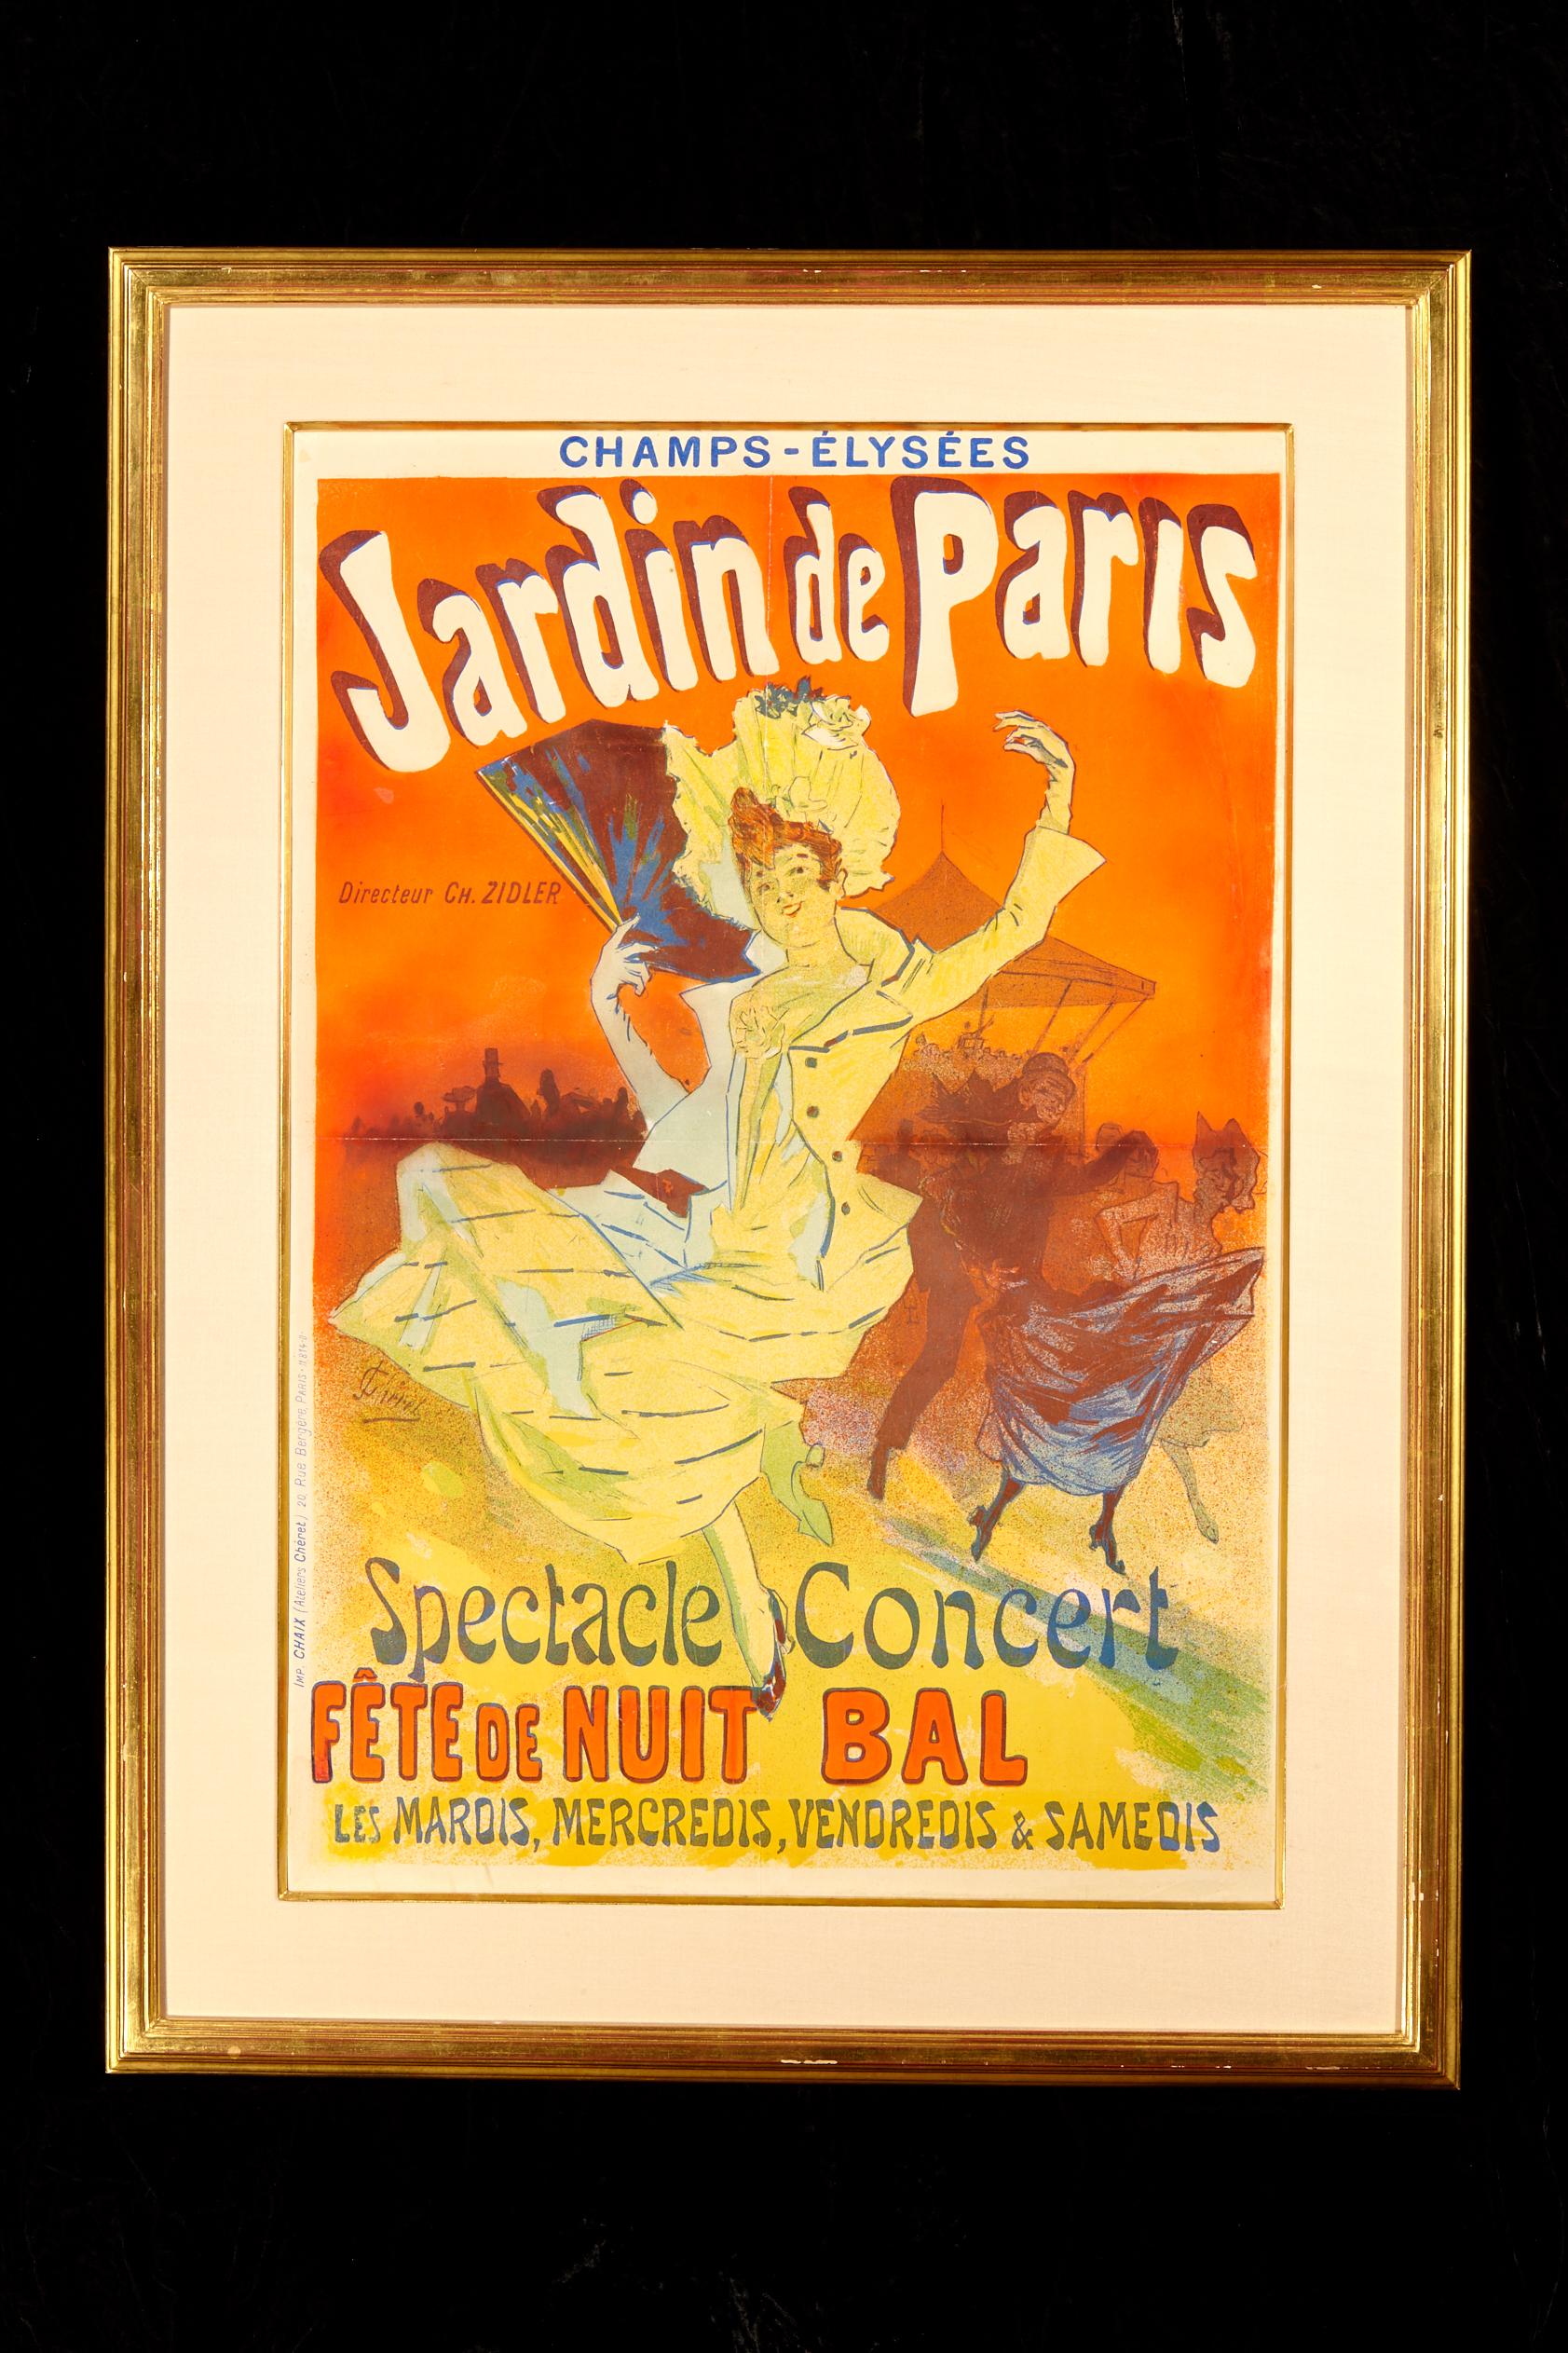 Jules Chéret (French, 1836-1932)
Jardin de Paris - Fête de nuit bal, 1890
Lithograph in colors on paper (crease lines visible)

Sheet: 32.5 x 23.3 inches (82.2 x 58.7 cm) 
Printed signature lower left
Printed by Chaix, Paris 

Framed dimensions 40.5